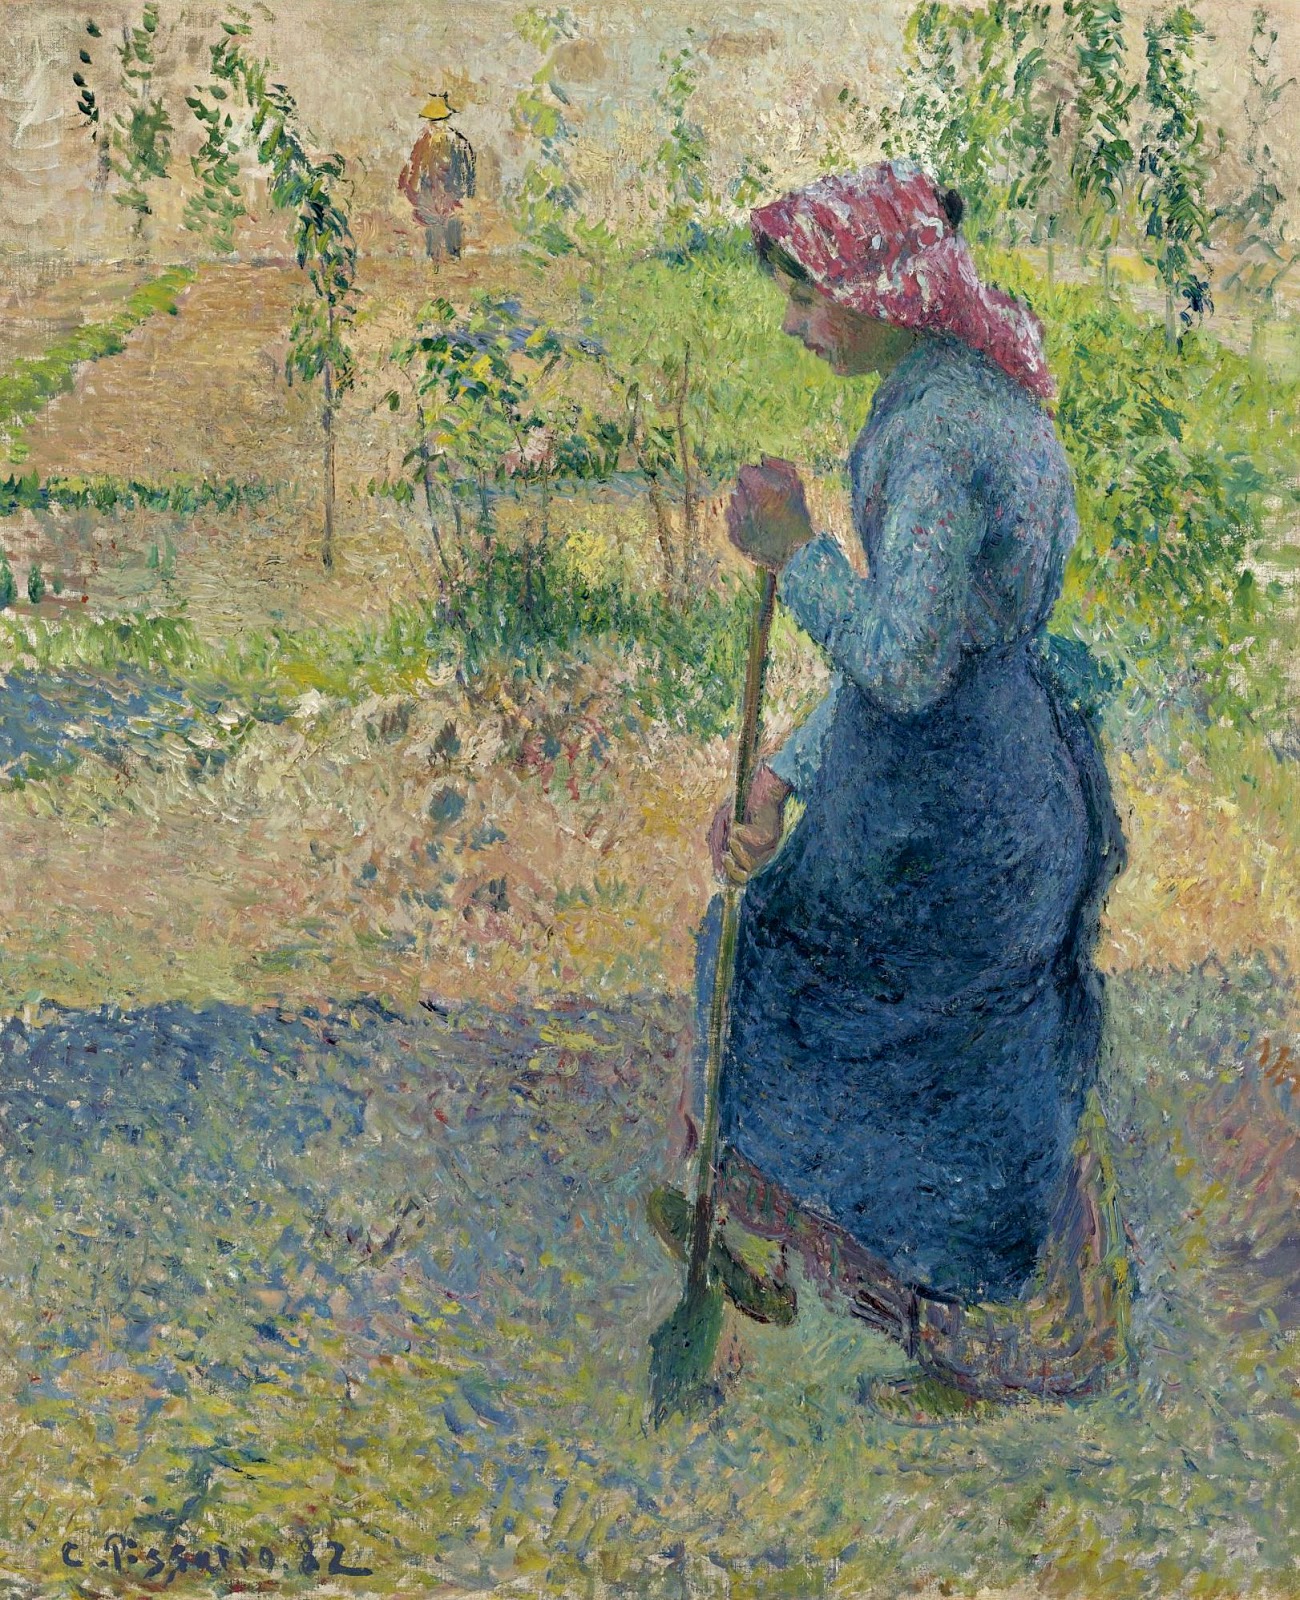 Camille+Pissarro-1830-1903 (396).jpg